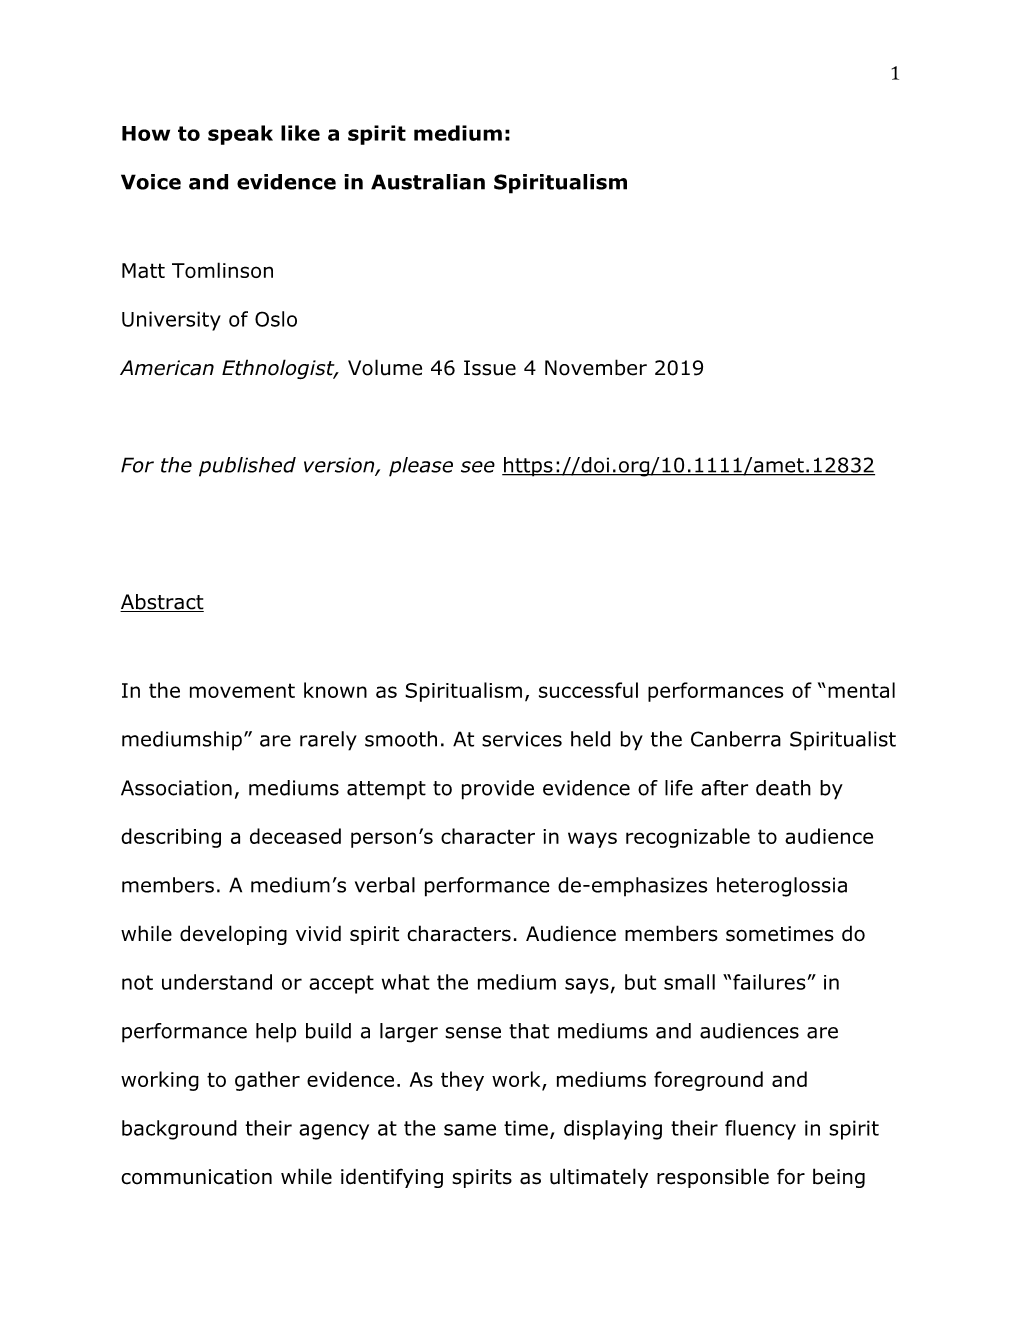 Voice and Evidence in Australian Spiritualism Matt Tomlinson